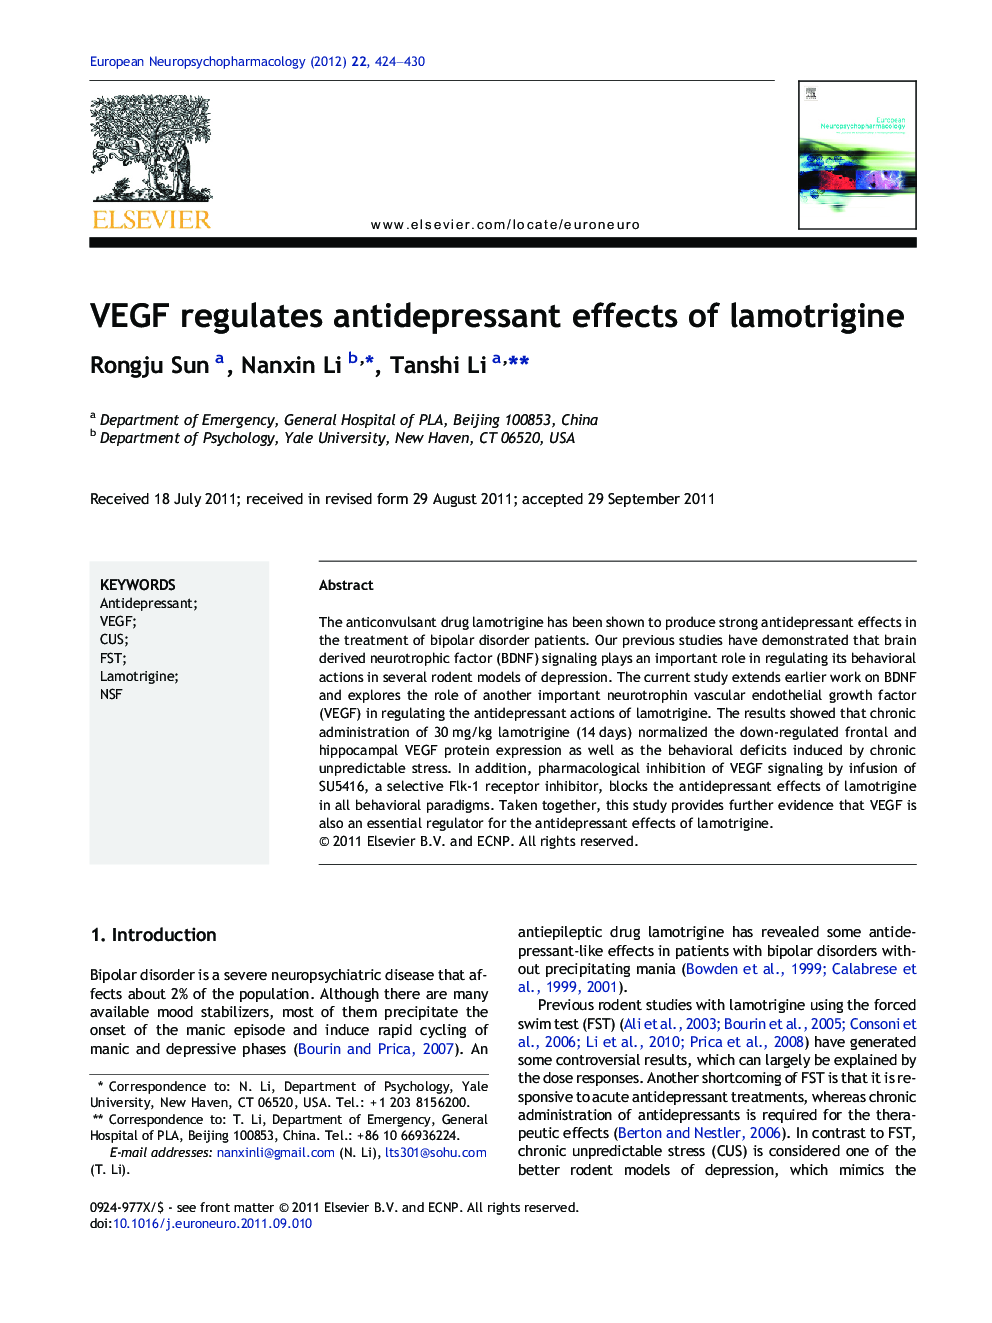 VEGF regulates antidepressant effects of lamotrigine